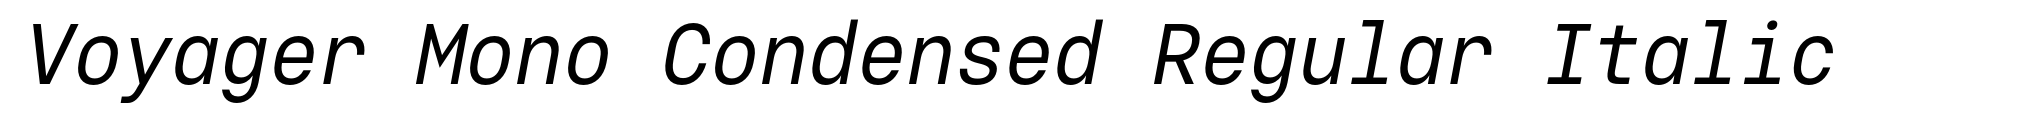 Voyager Mono Condensed Regular Italic image